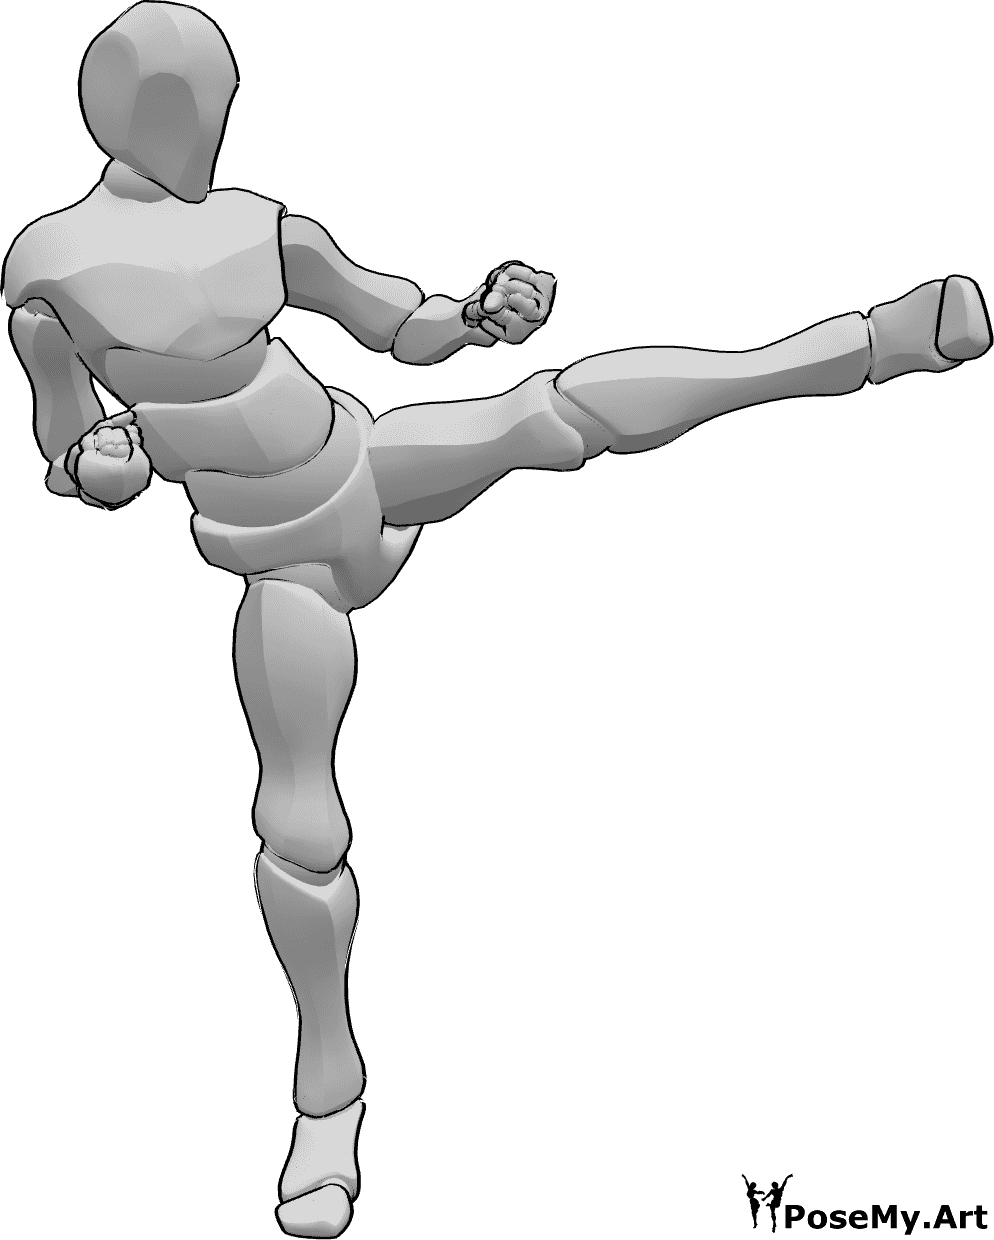 Karate Poses - Ready fight karate pose | PoseMy.Art